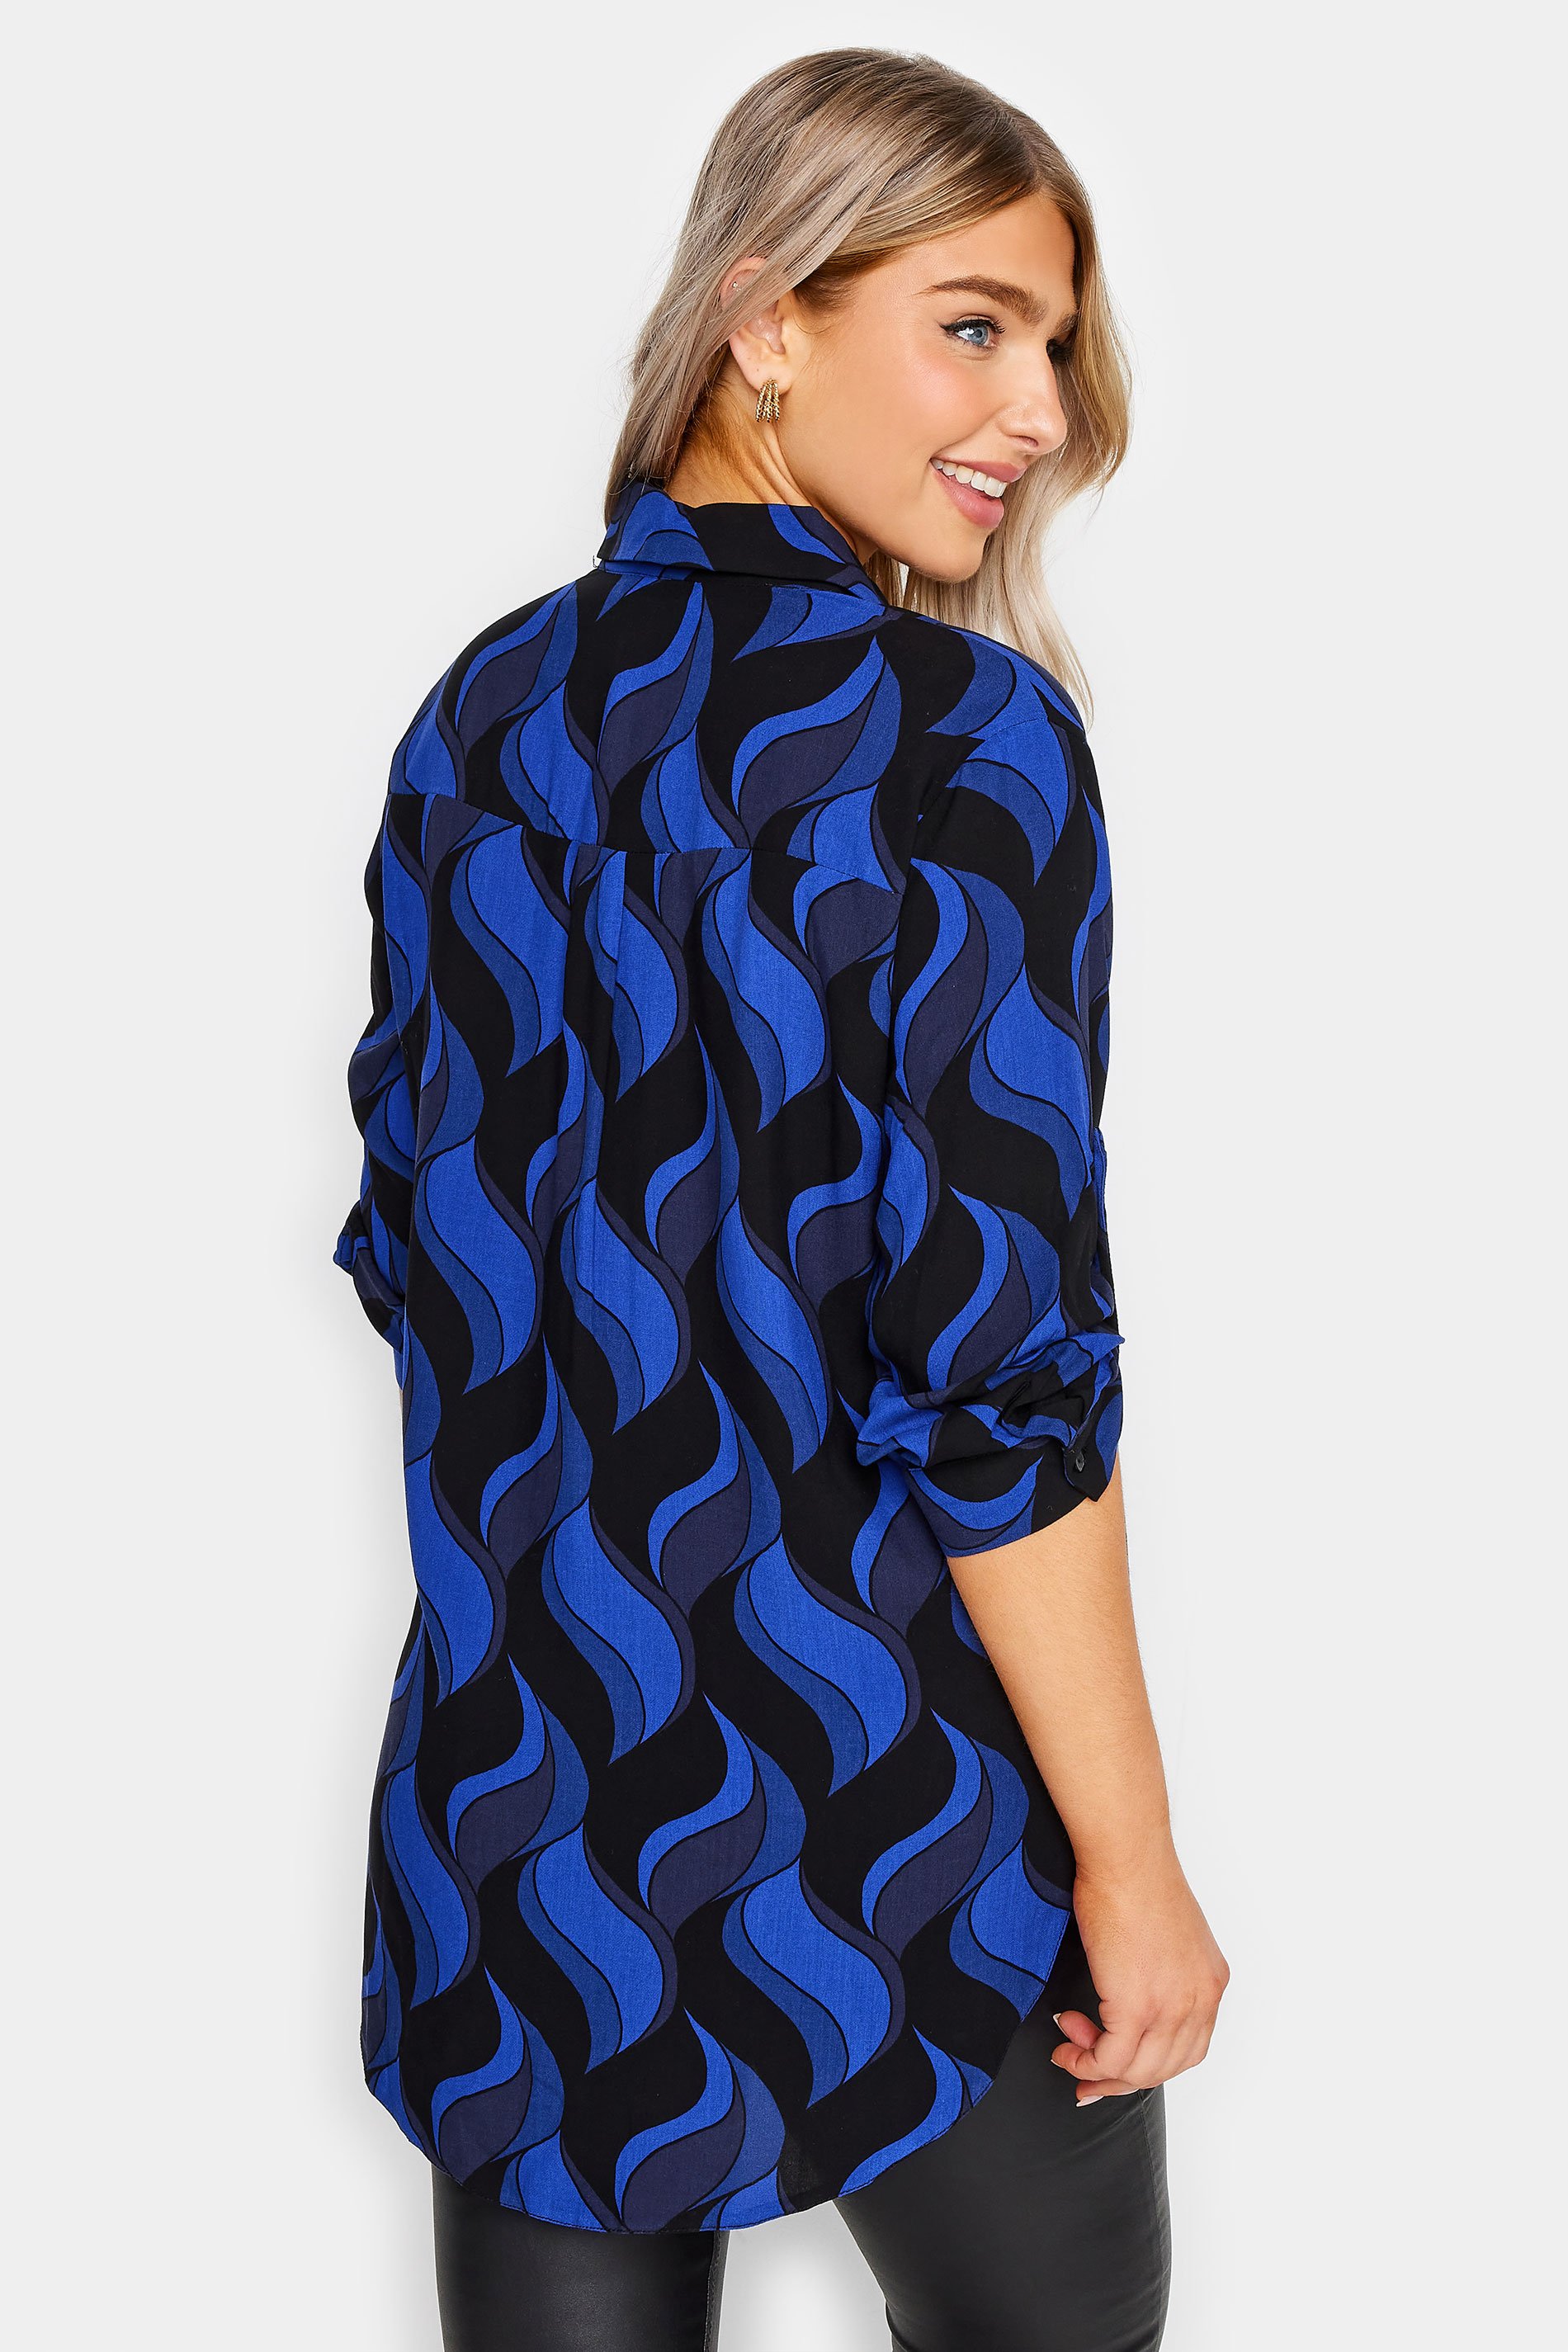 M&Co Black & Blue Swirl Print Tab Sleeve Shirt | M&Co 3